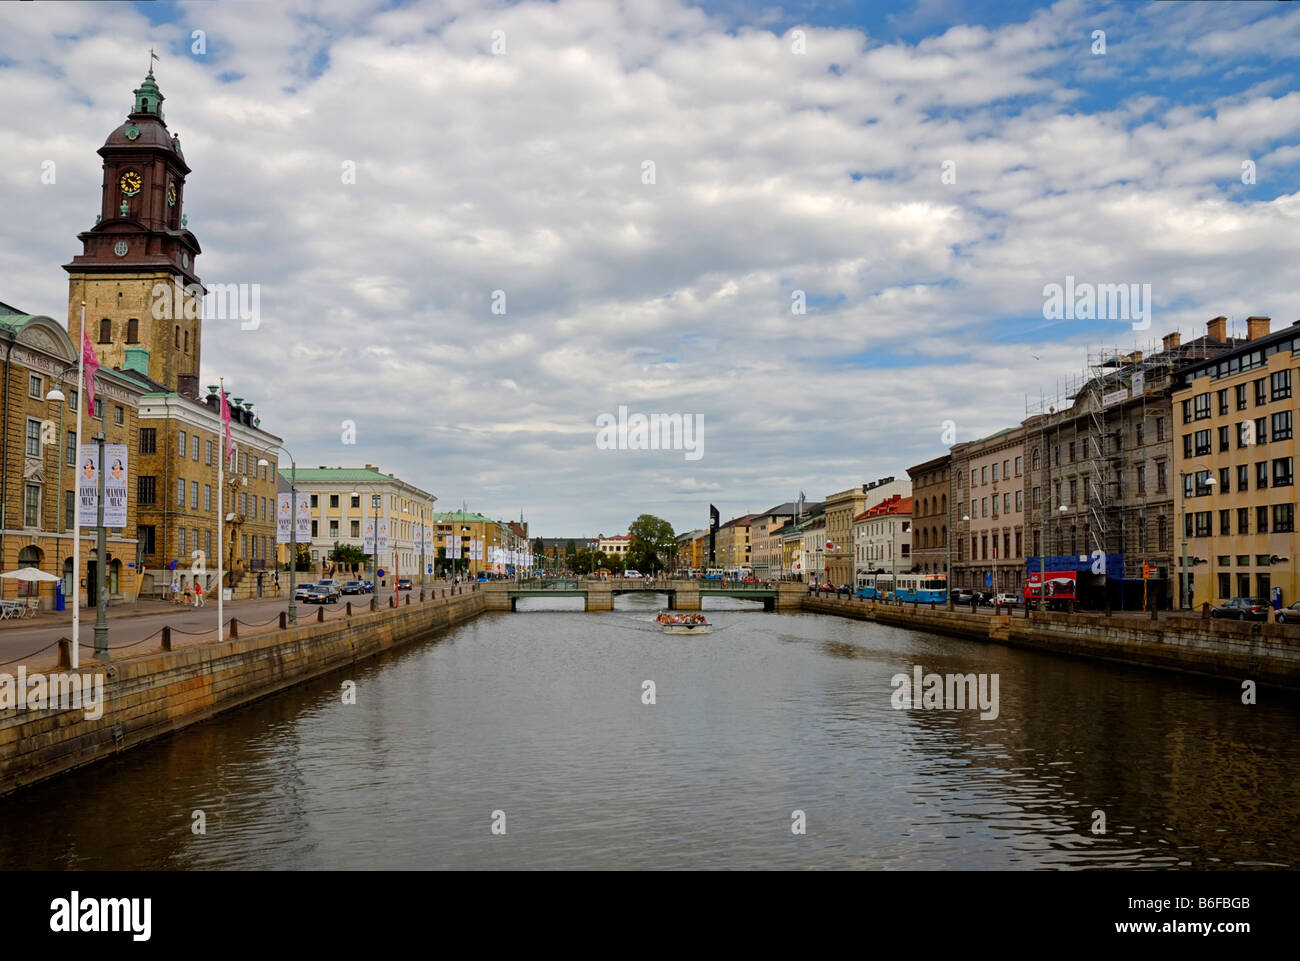 Fattighusan city canal with tourist boat and Gothenburg city museum, Gothenburg, Sweden, Scandinavia, Europe Stock Photo